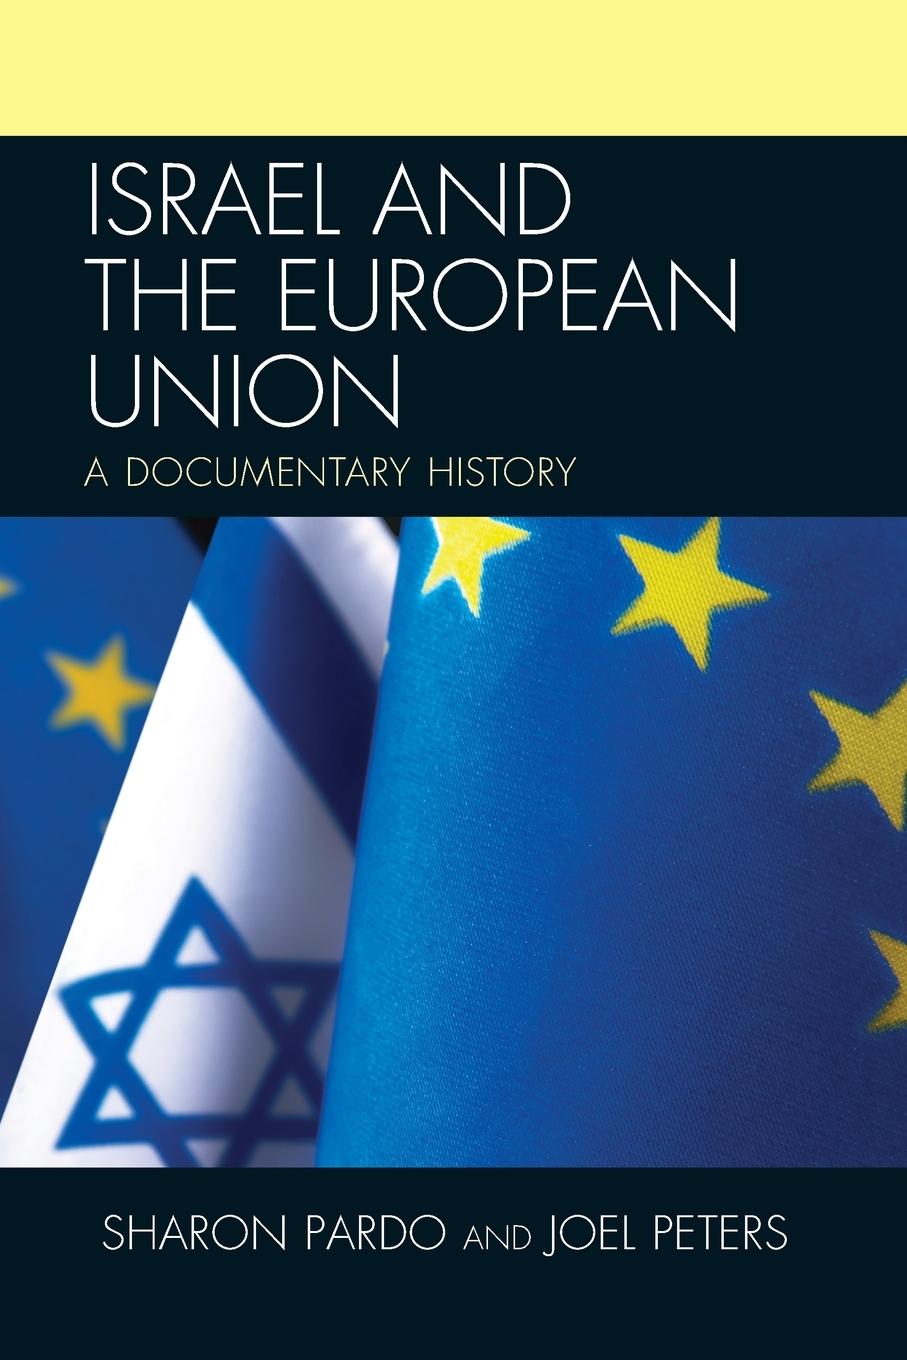 Israel and the European Union - Pardo, Sharon Peters, Joel